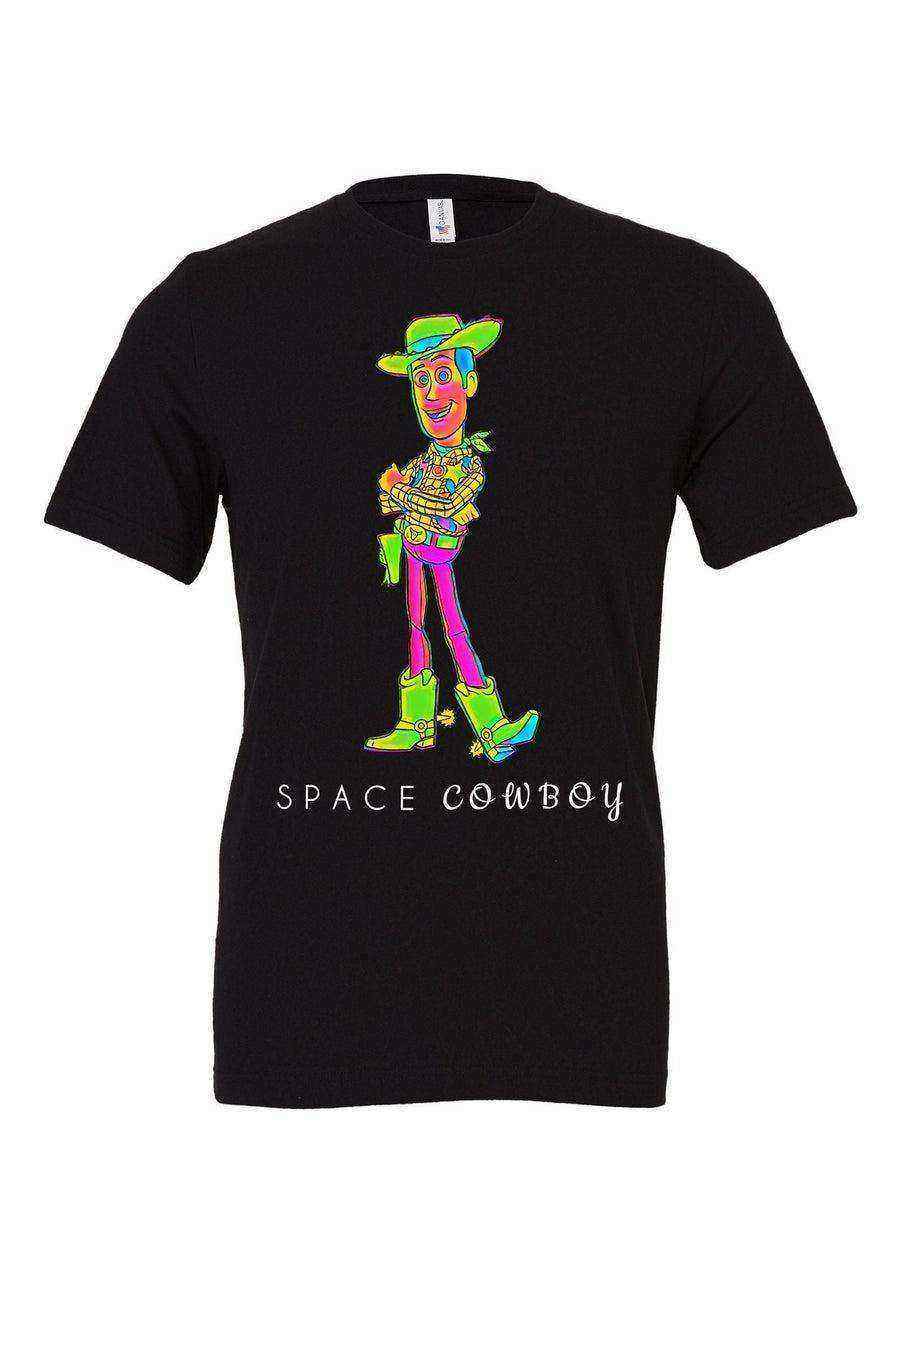 Woody Space Cowboy Shirt | Music Mashup - Dylan's Tees